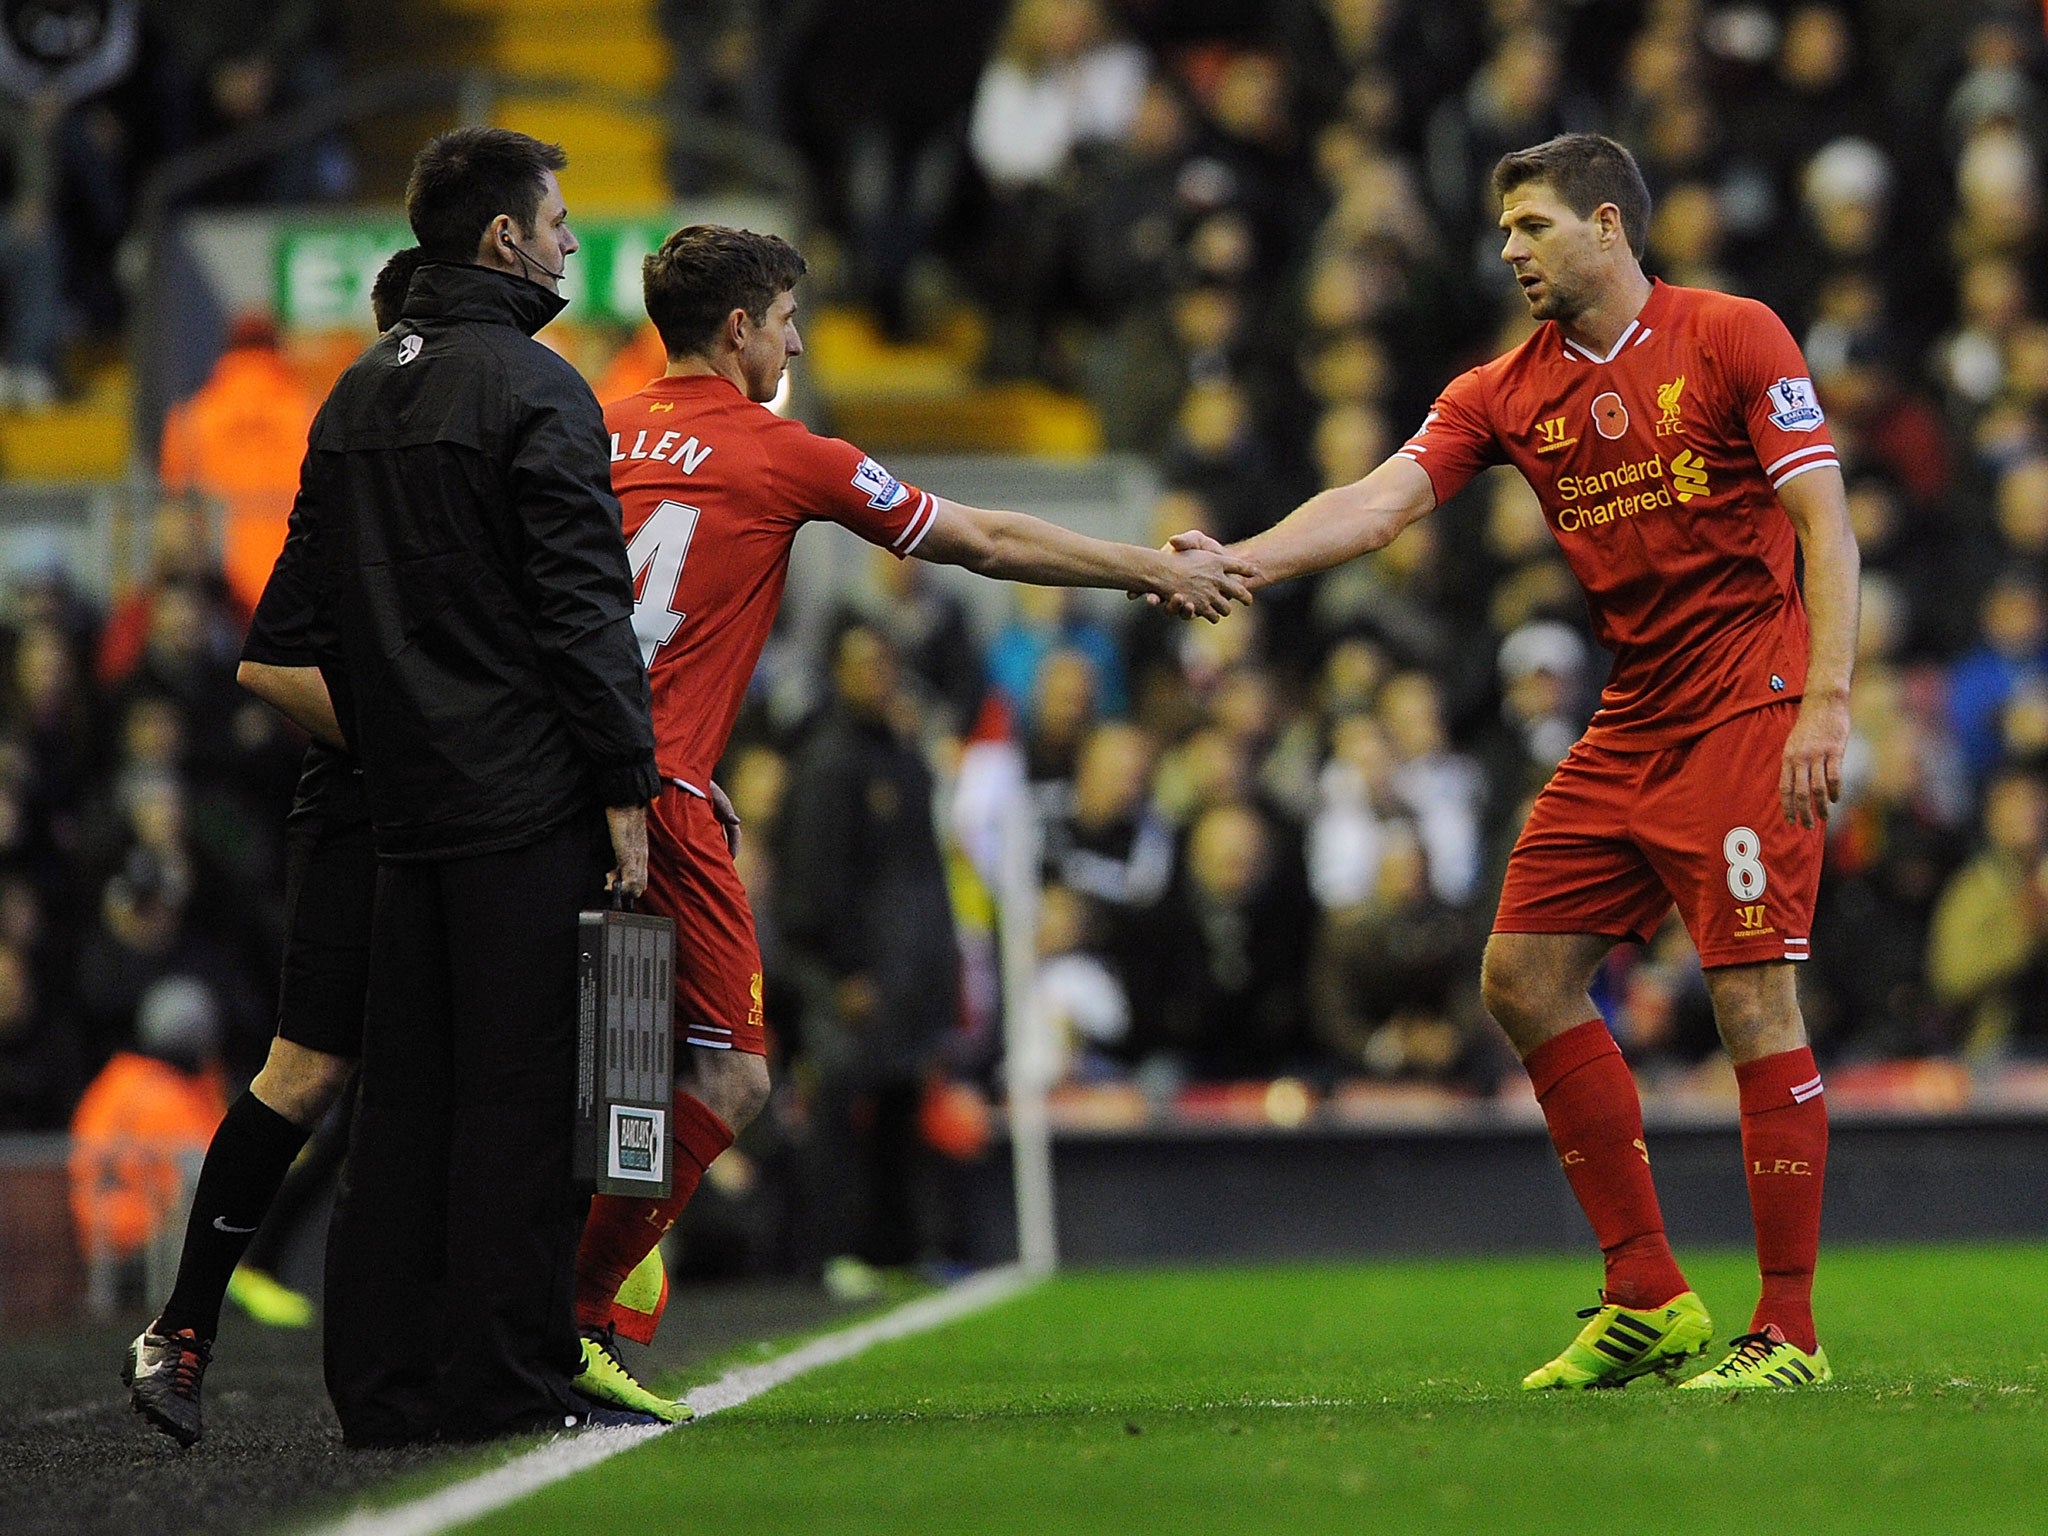 Liverpool captain Steven Gerrard has been praised by his team-mate Jose Enrique